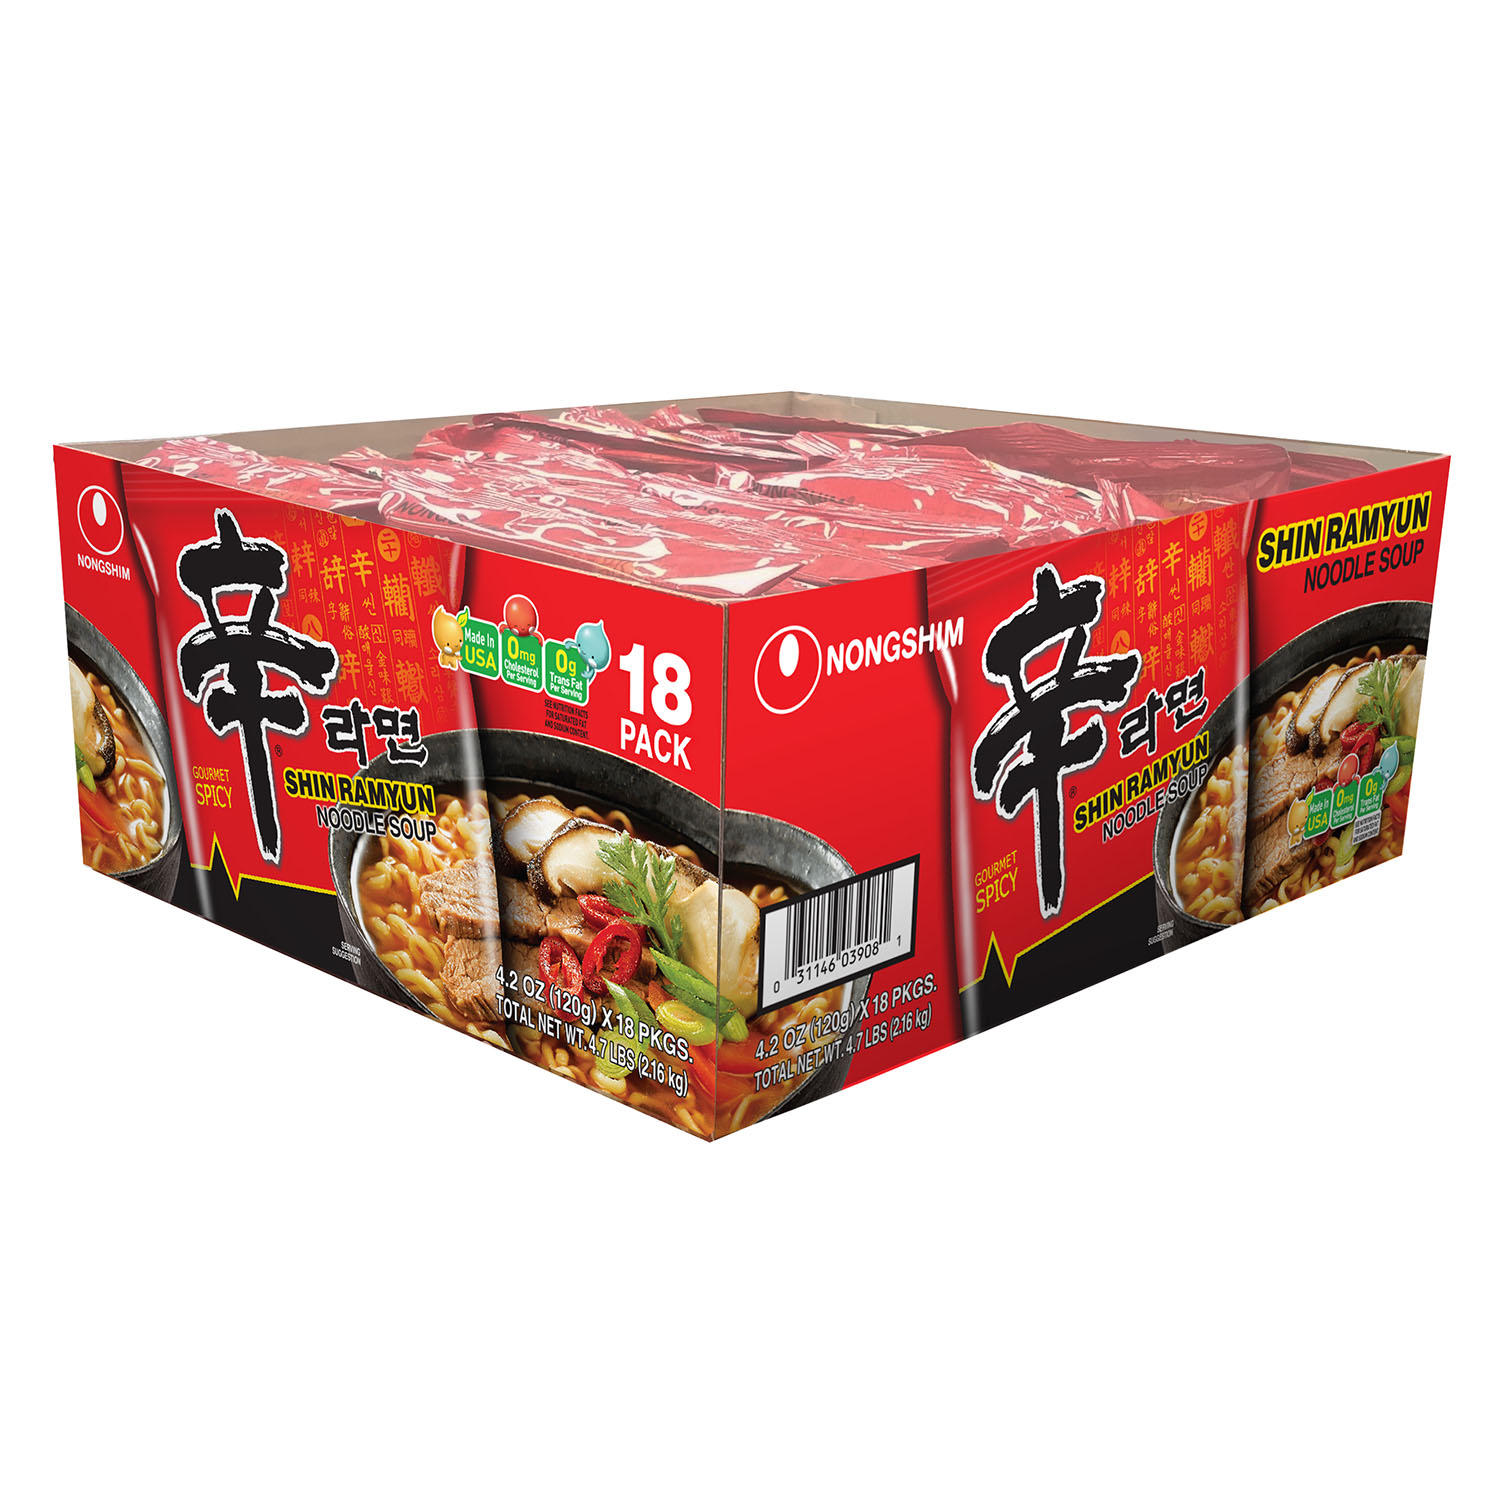 Nong Shim Ramyun Spicy Ramen Beef Noodle Soup, New 16 Pk. 4.2 oz. - image 4 of 6